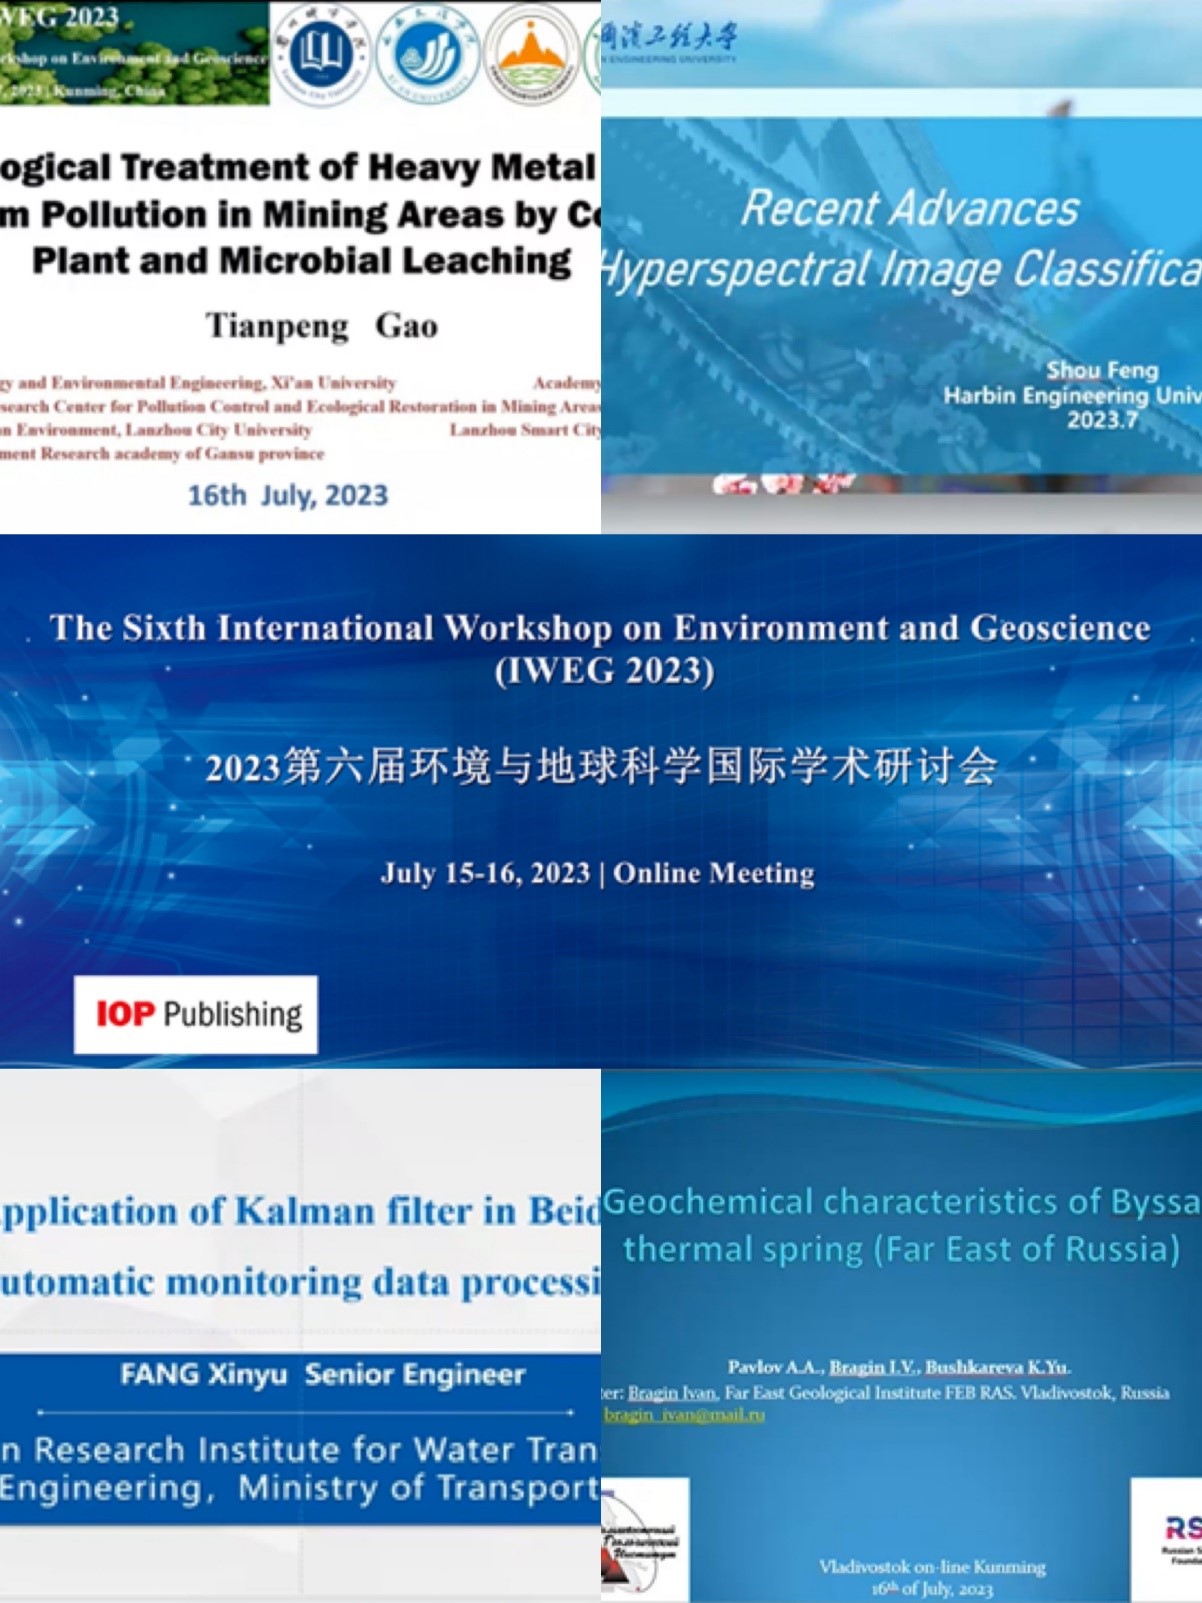 IWEG2023—The Sixth International Workshop on Environment and Geoscience